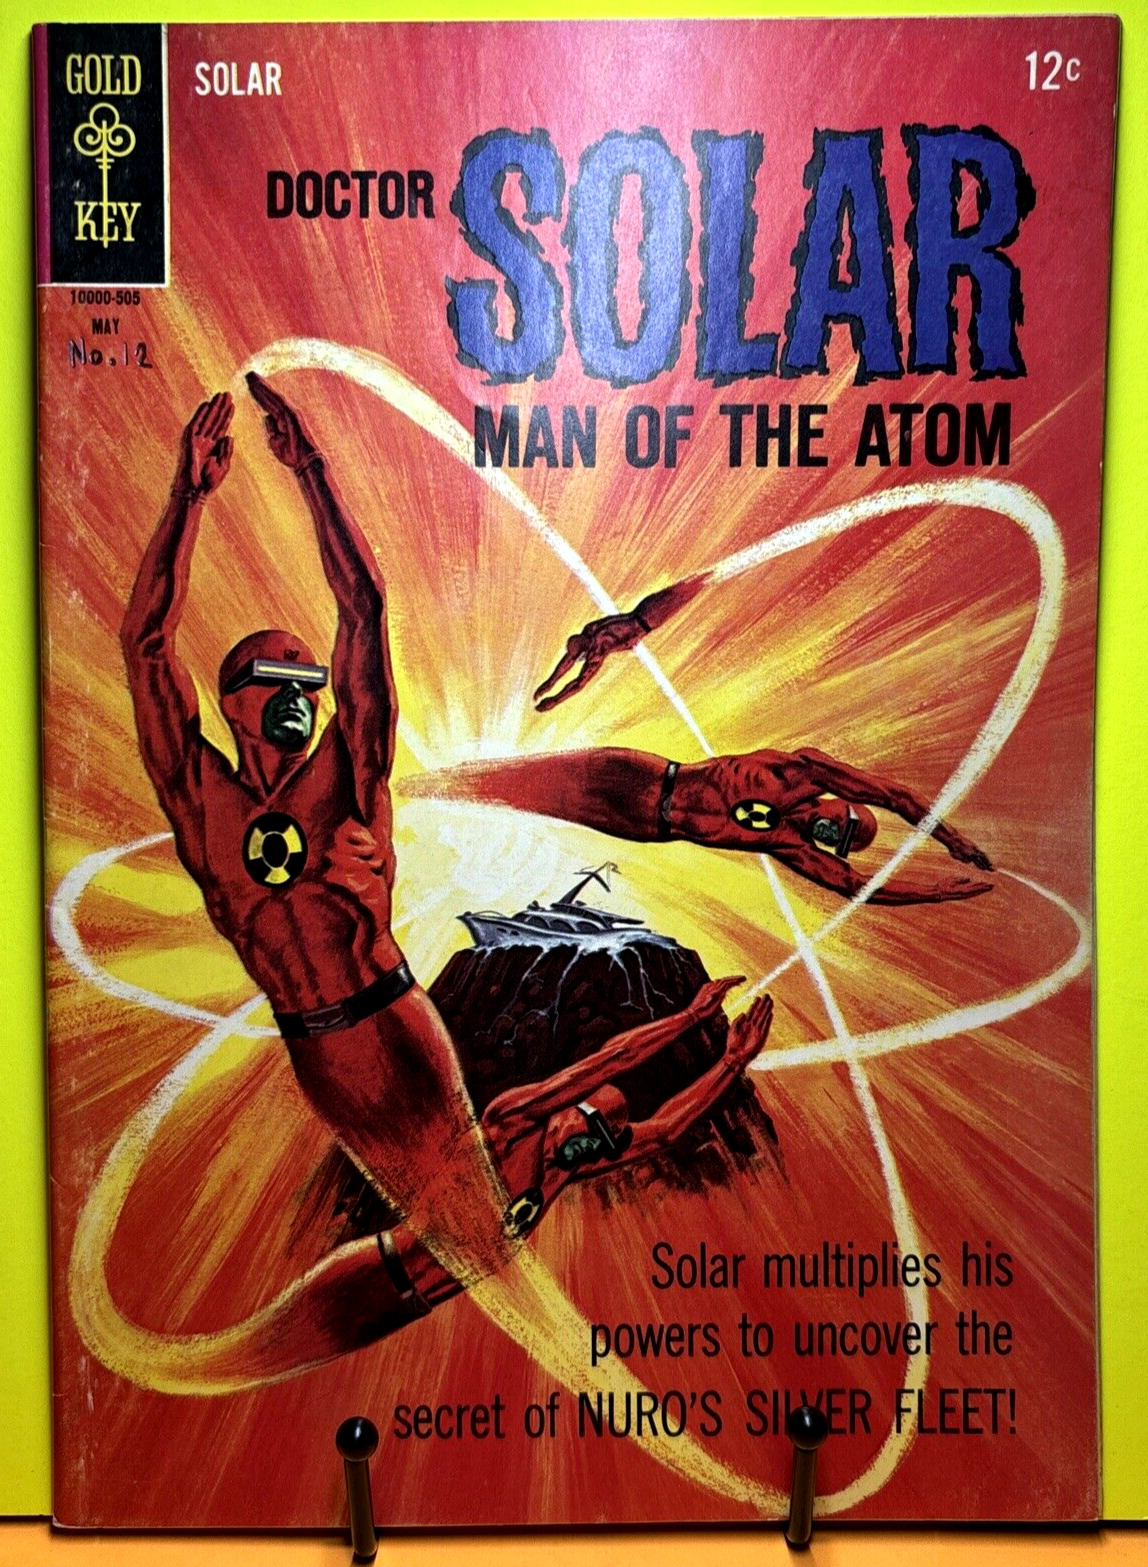 1965 Doctor “SOLAR” Man Of The Atom Gold Key Comic Book No. 12.